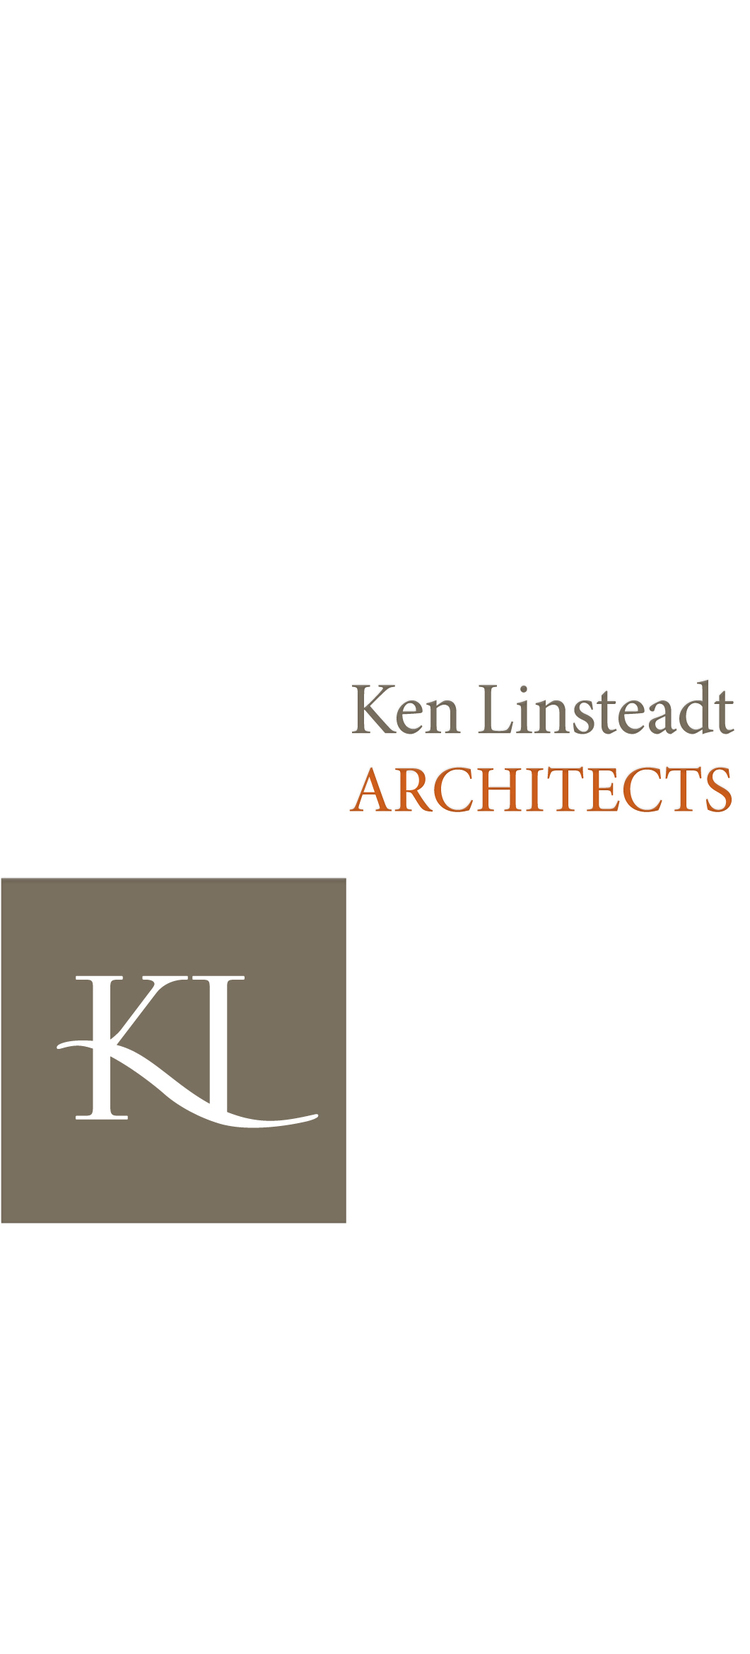 Ken Linsteadt ARCHITECTS